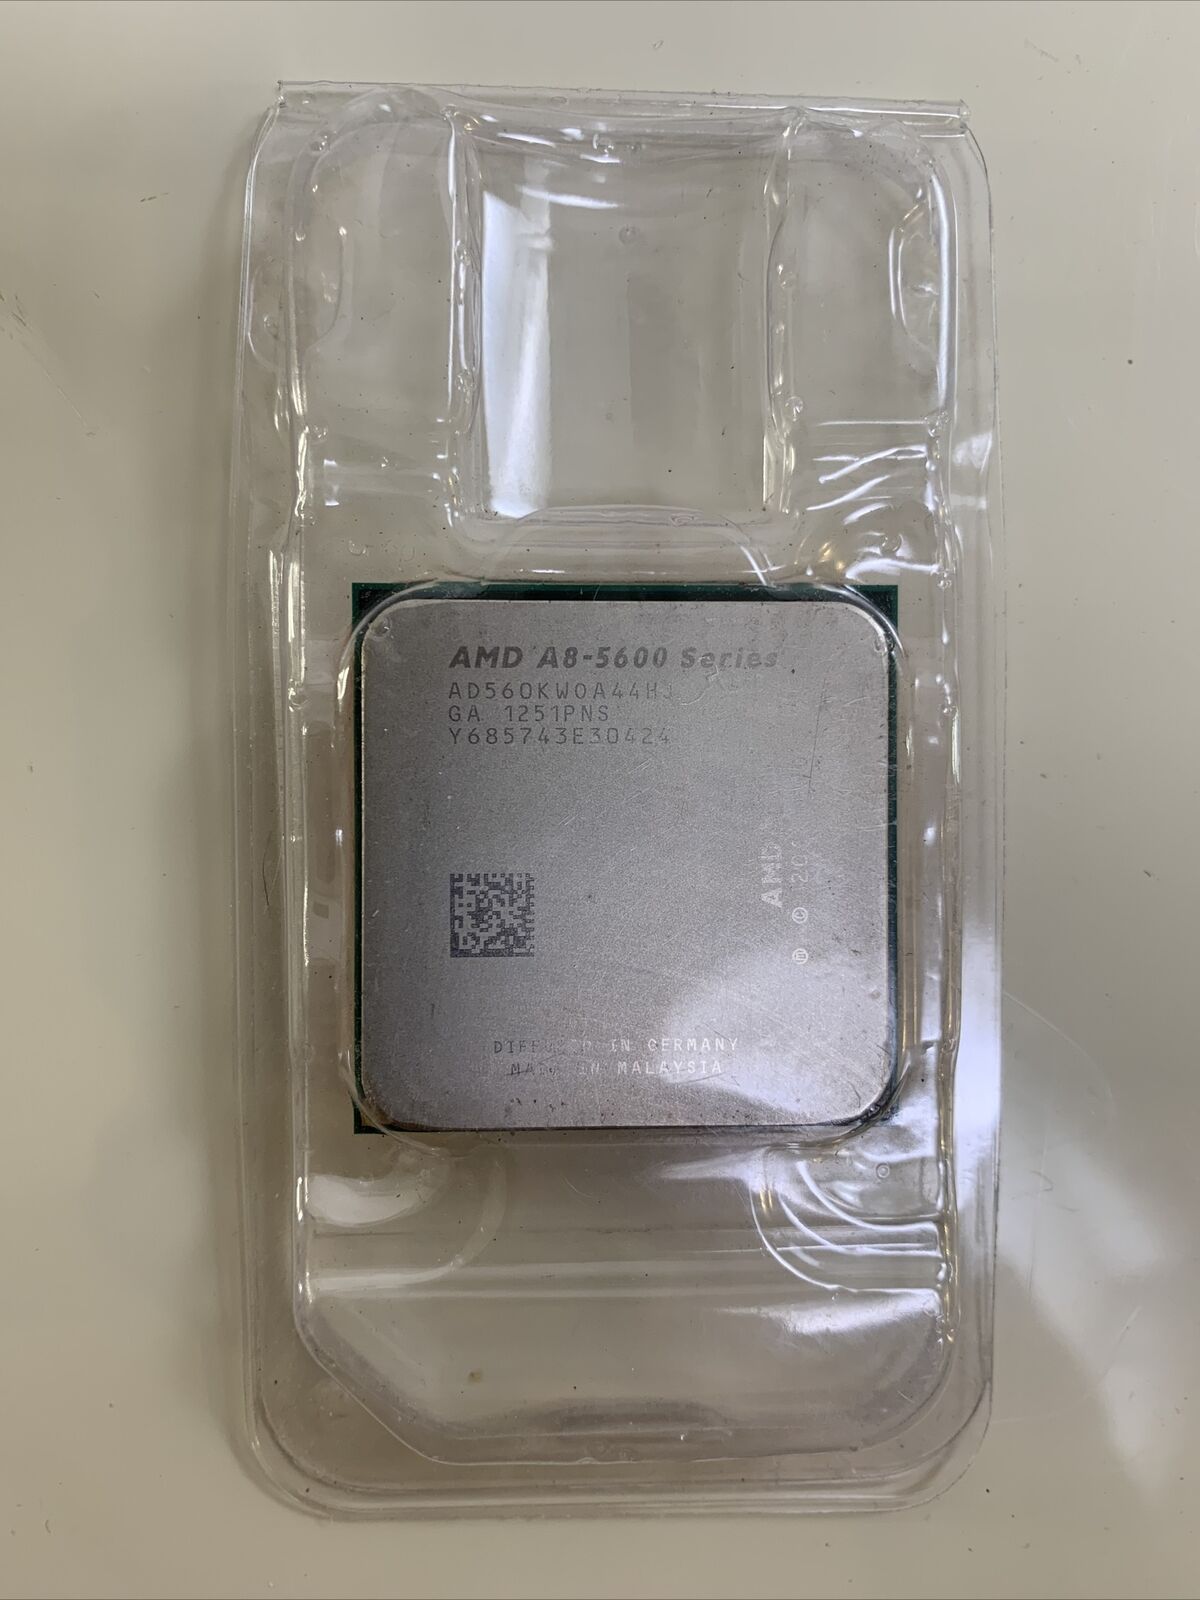 Genuine AMD A8-5600 AD560KW0A44HJ Processor